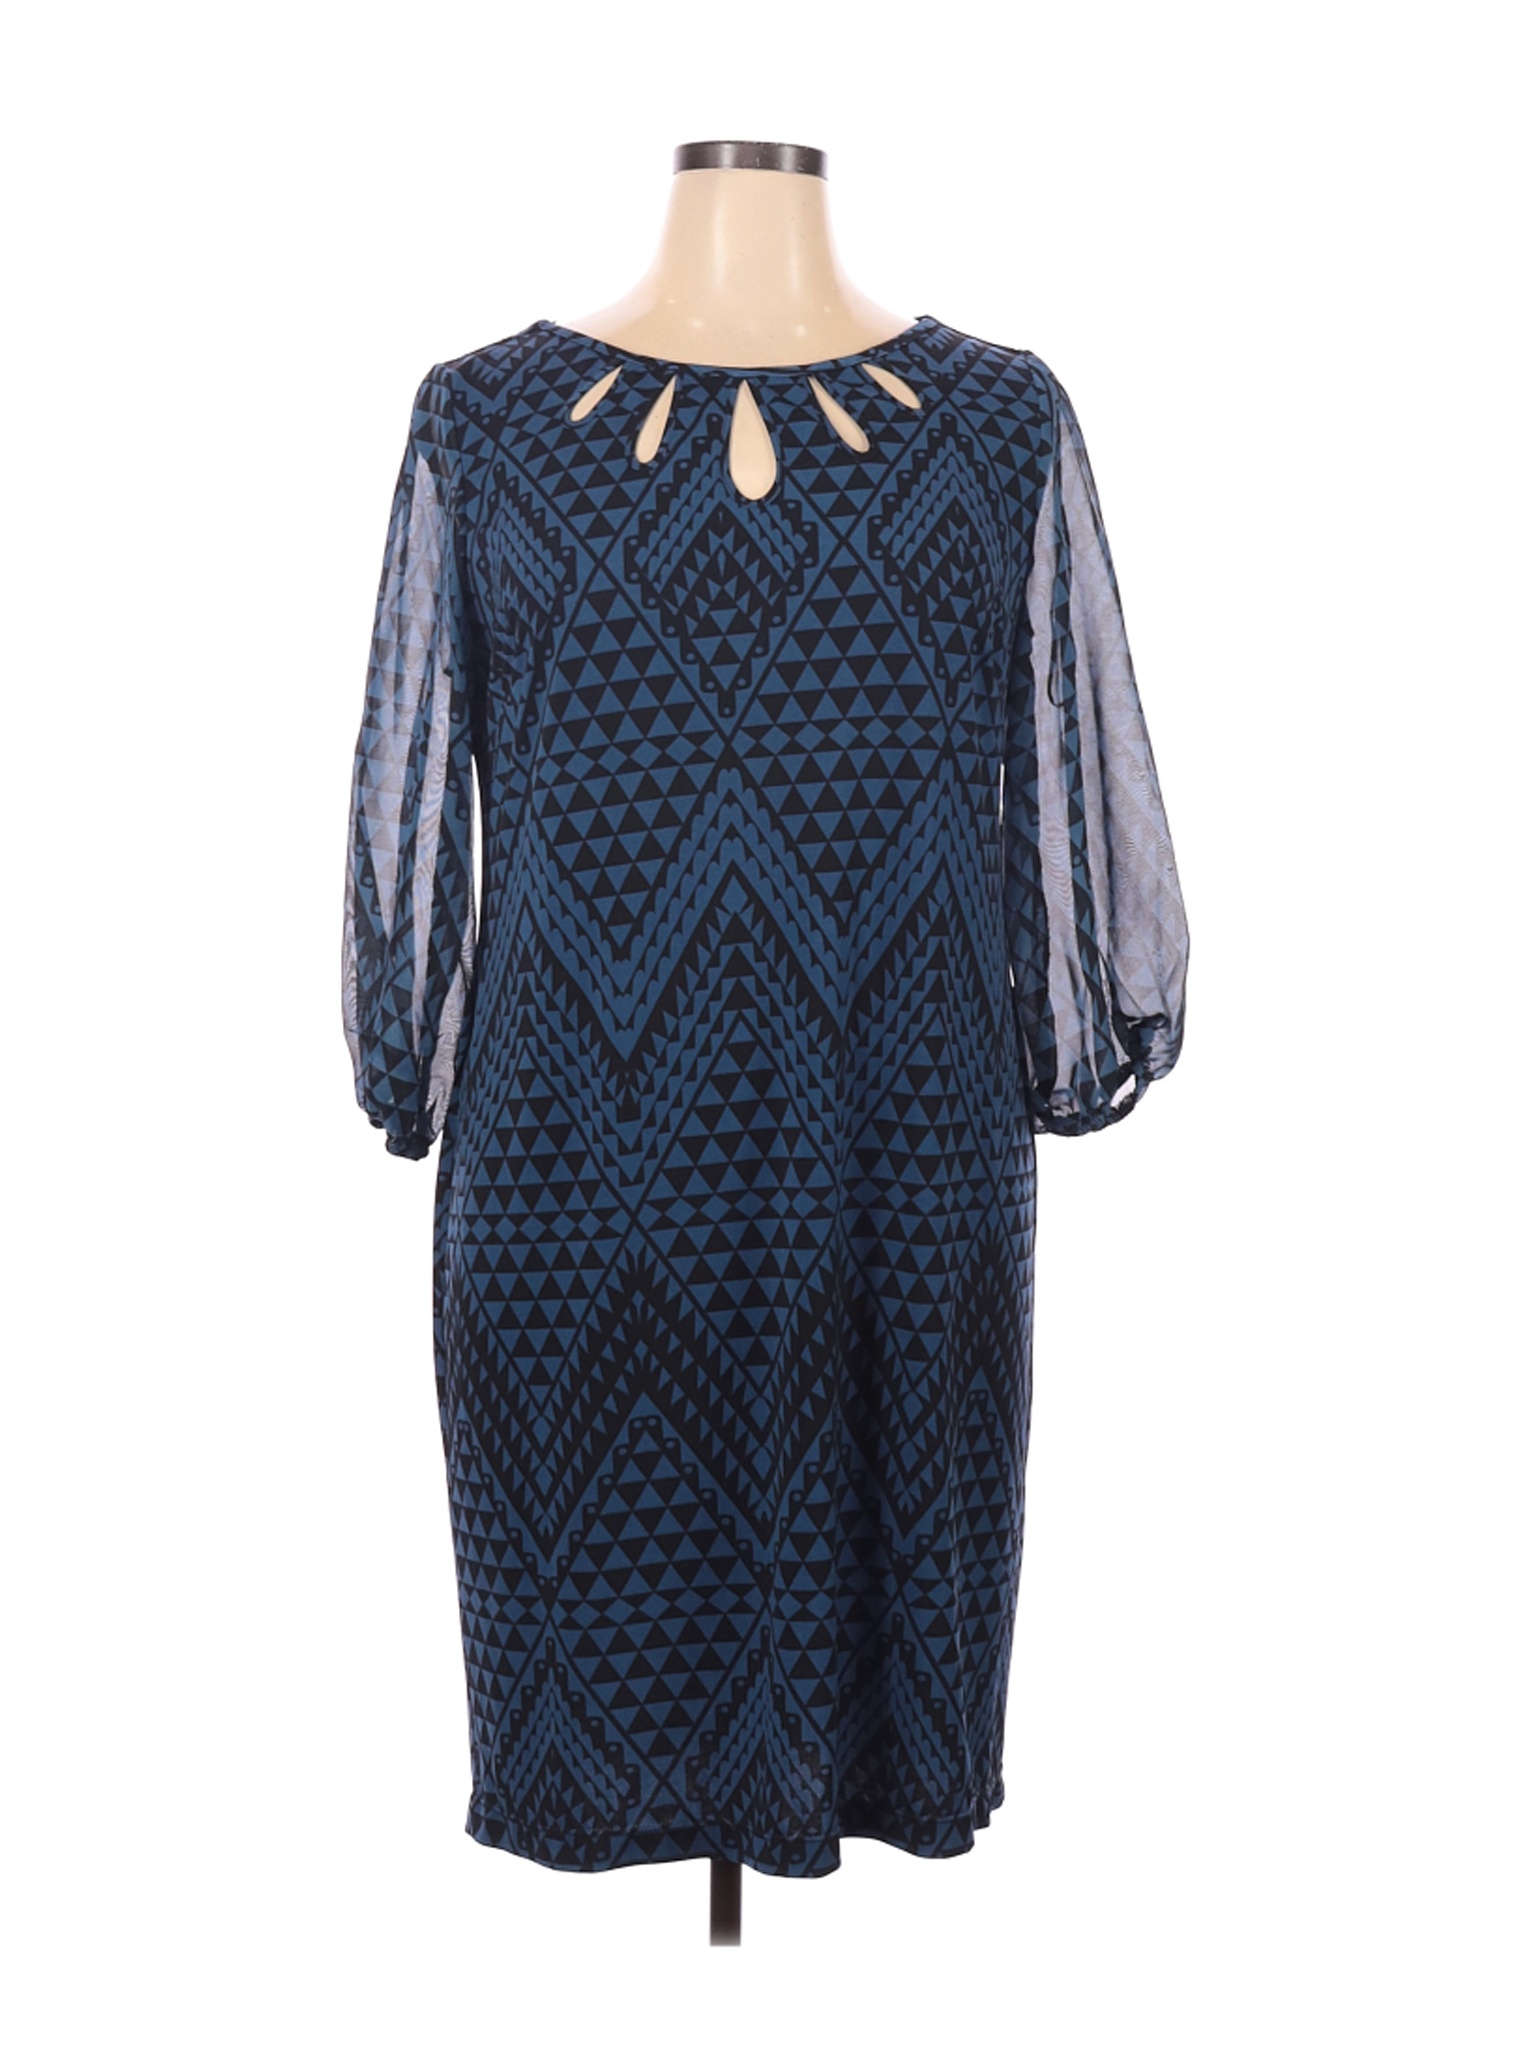 Danny Noble Women Blue Casual Dress 1X Plus | eBay